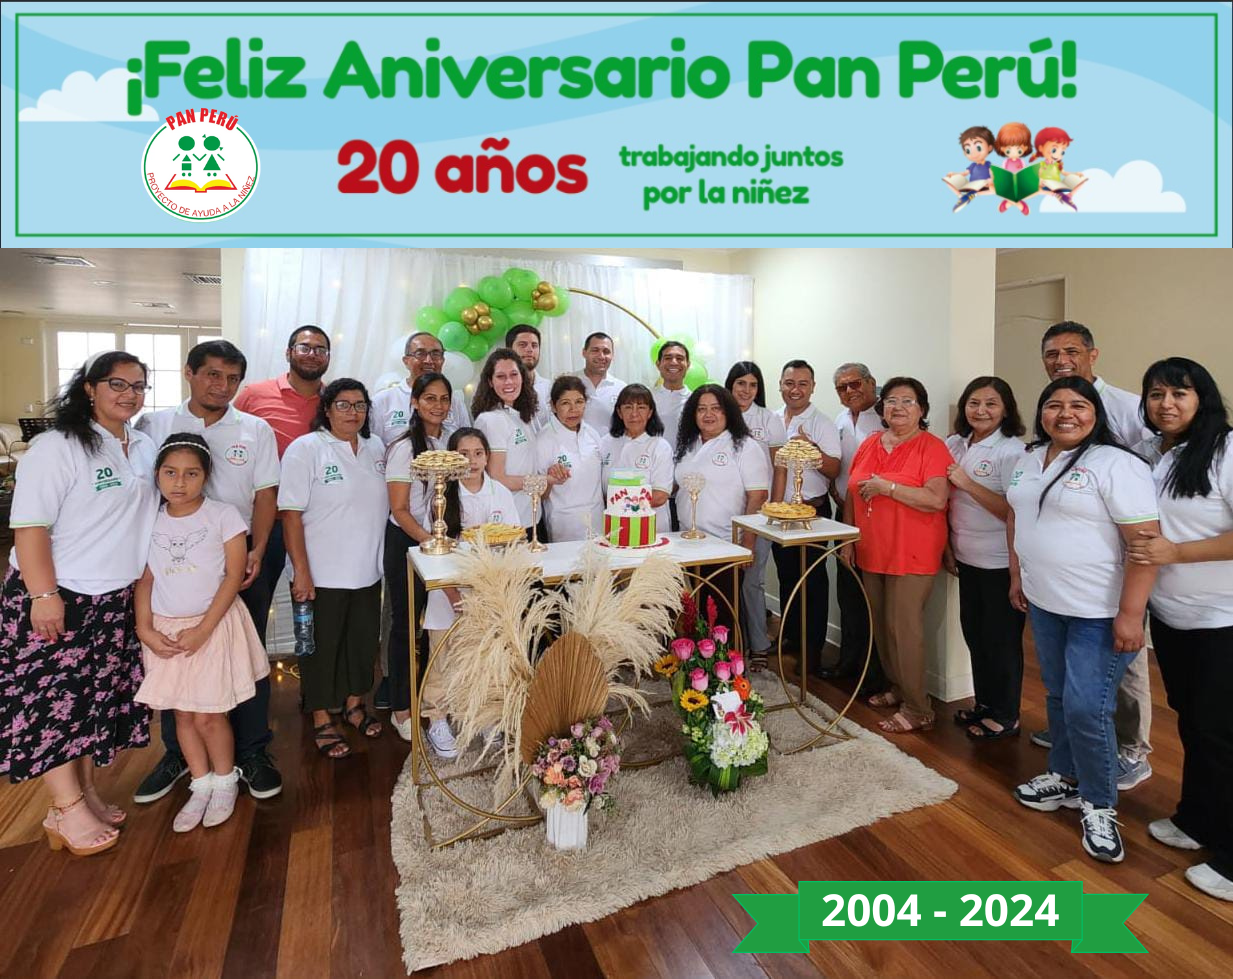 Feliz 20 Aniversario Pan Peru!